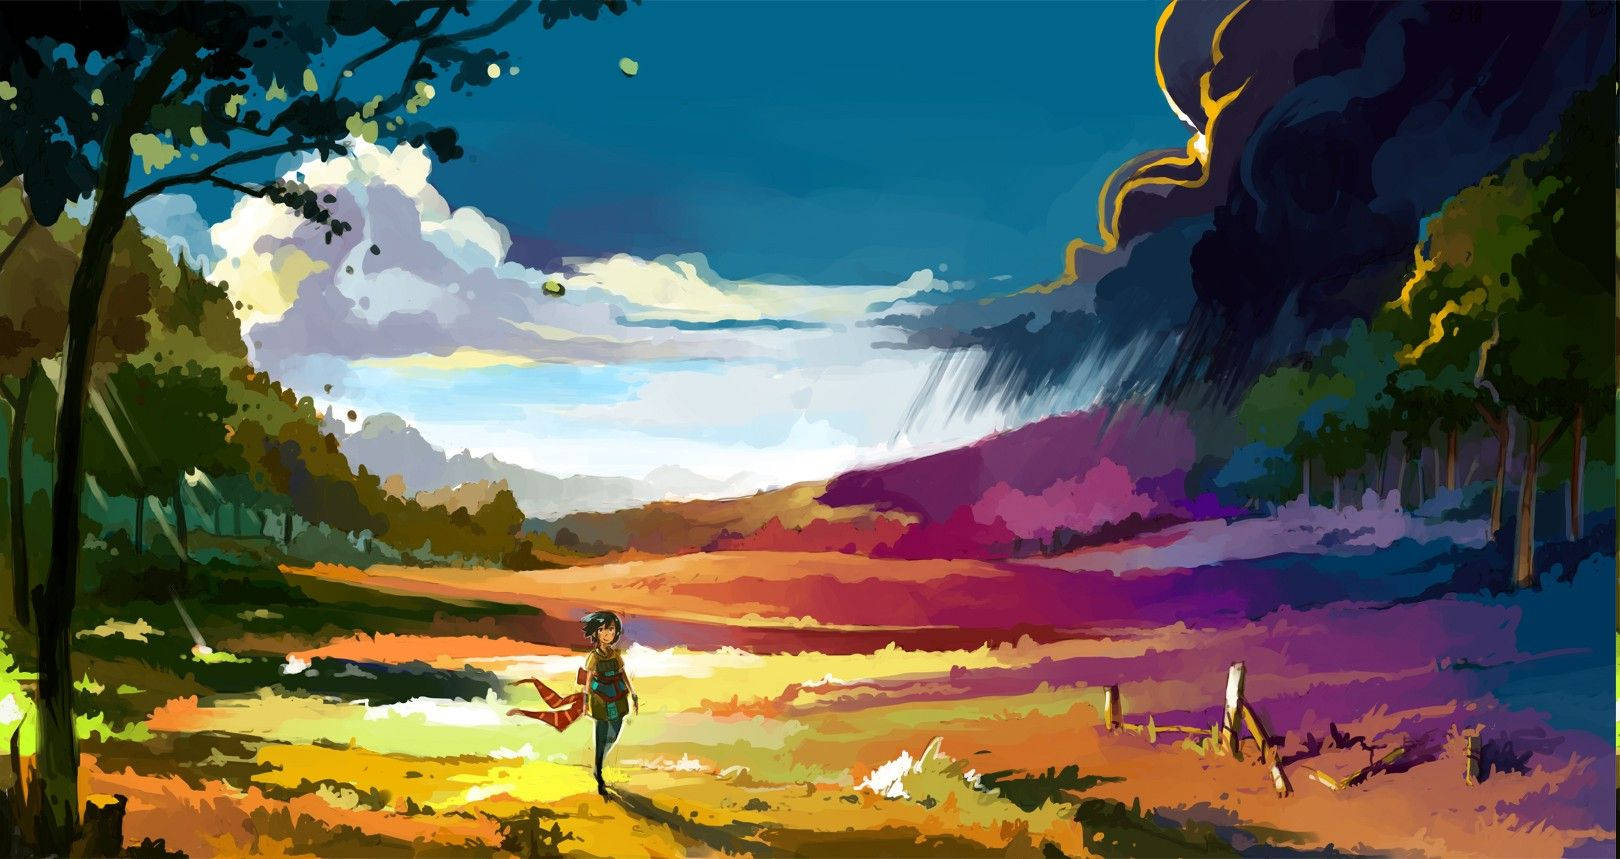 Free Anime Landscape Wallpaper Downloads, Anime Landscape Wallpaper for FREE